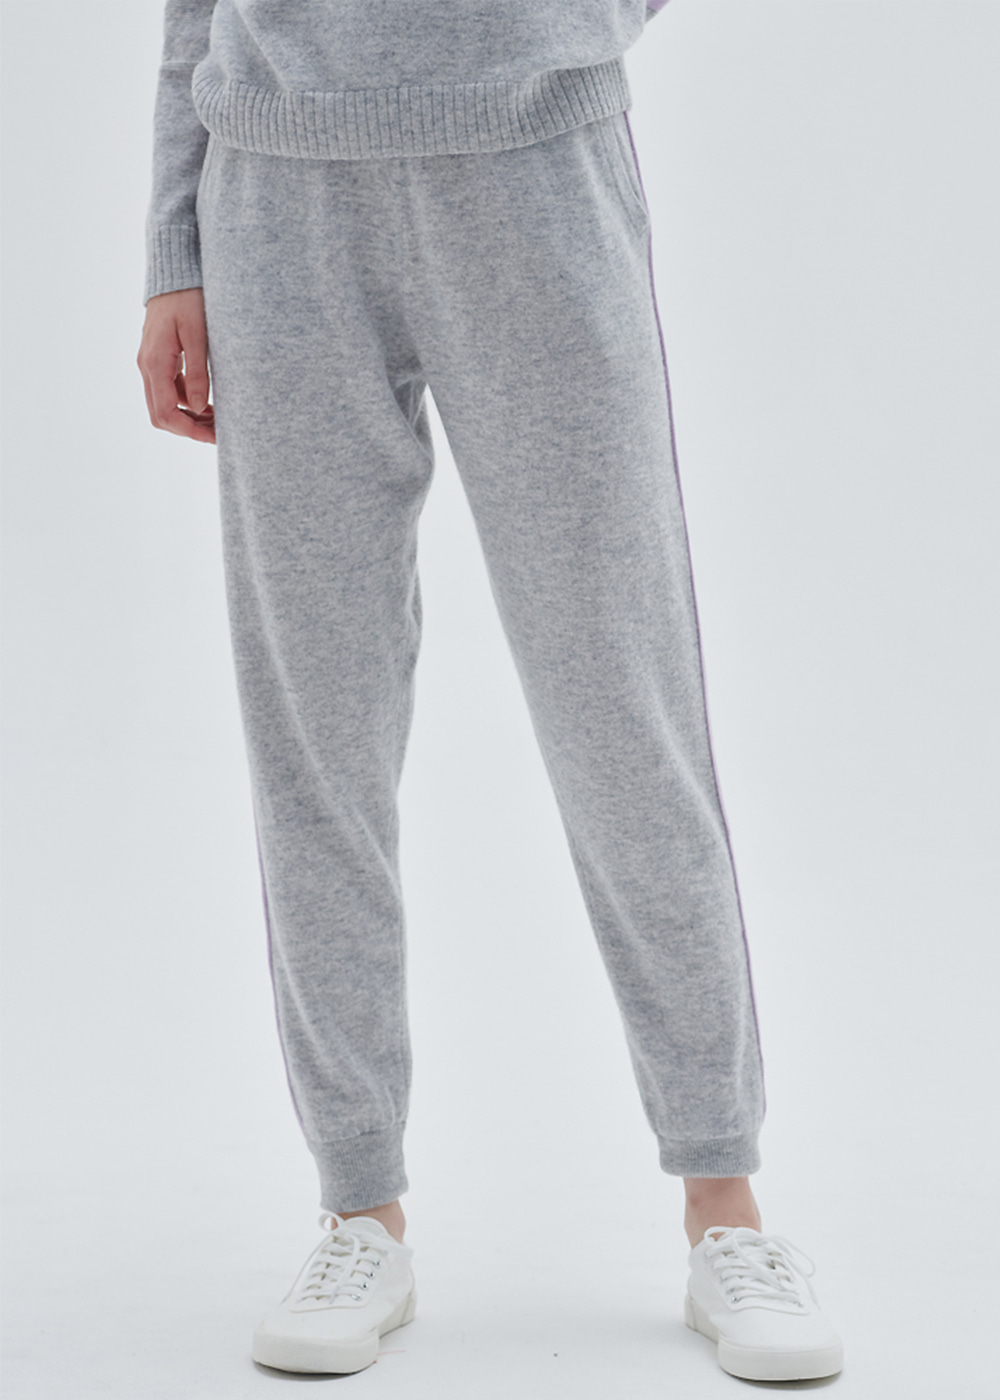 Rolledge jogger pants(light grey)